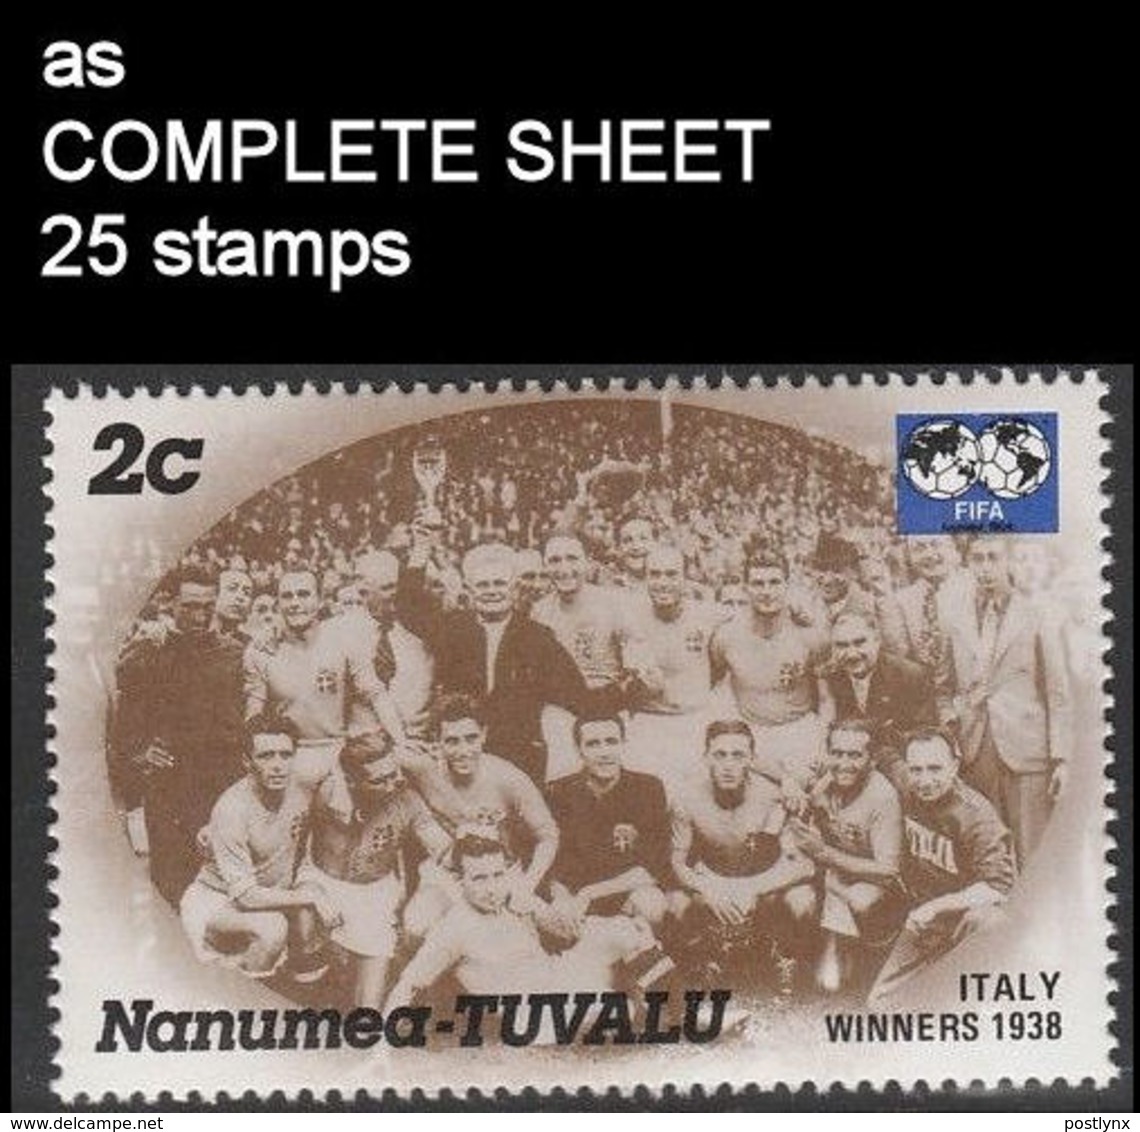 CV:€27.81  BULK:5x  TTUVALU-Nanumea 1986 World Cup Mexico France Winner Italy 1938 2c COMPLETE SHEET:25 Stamps - 1938 – France